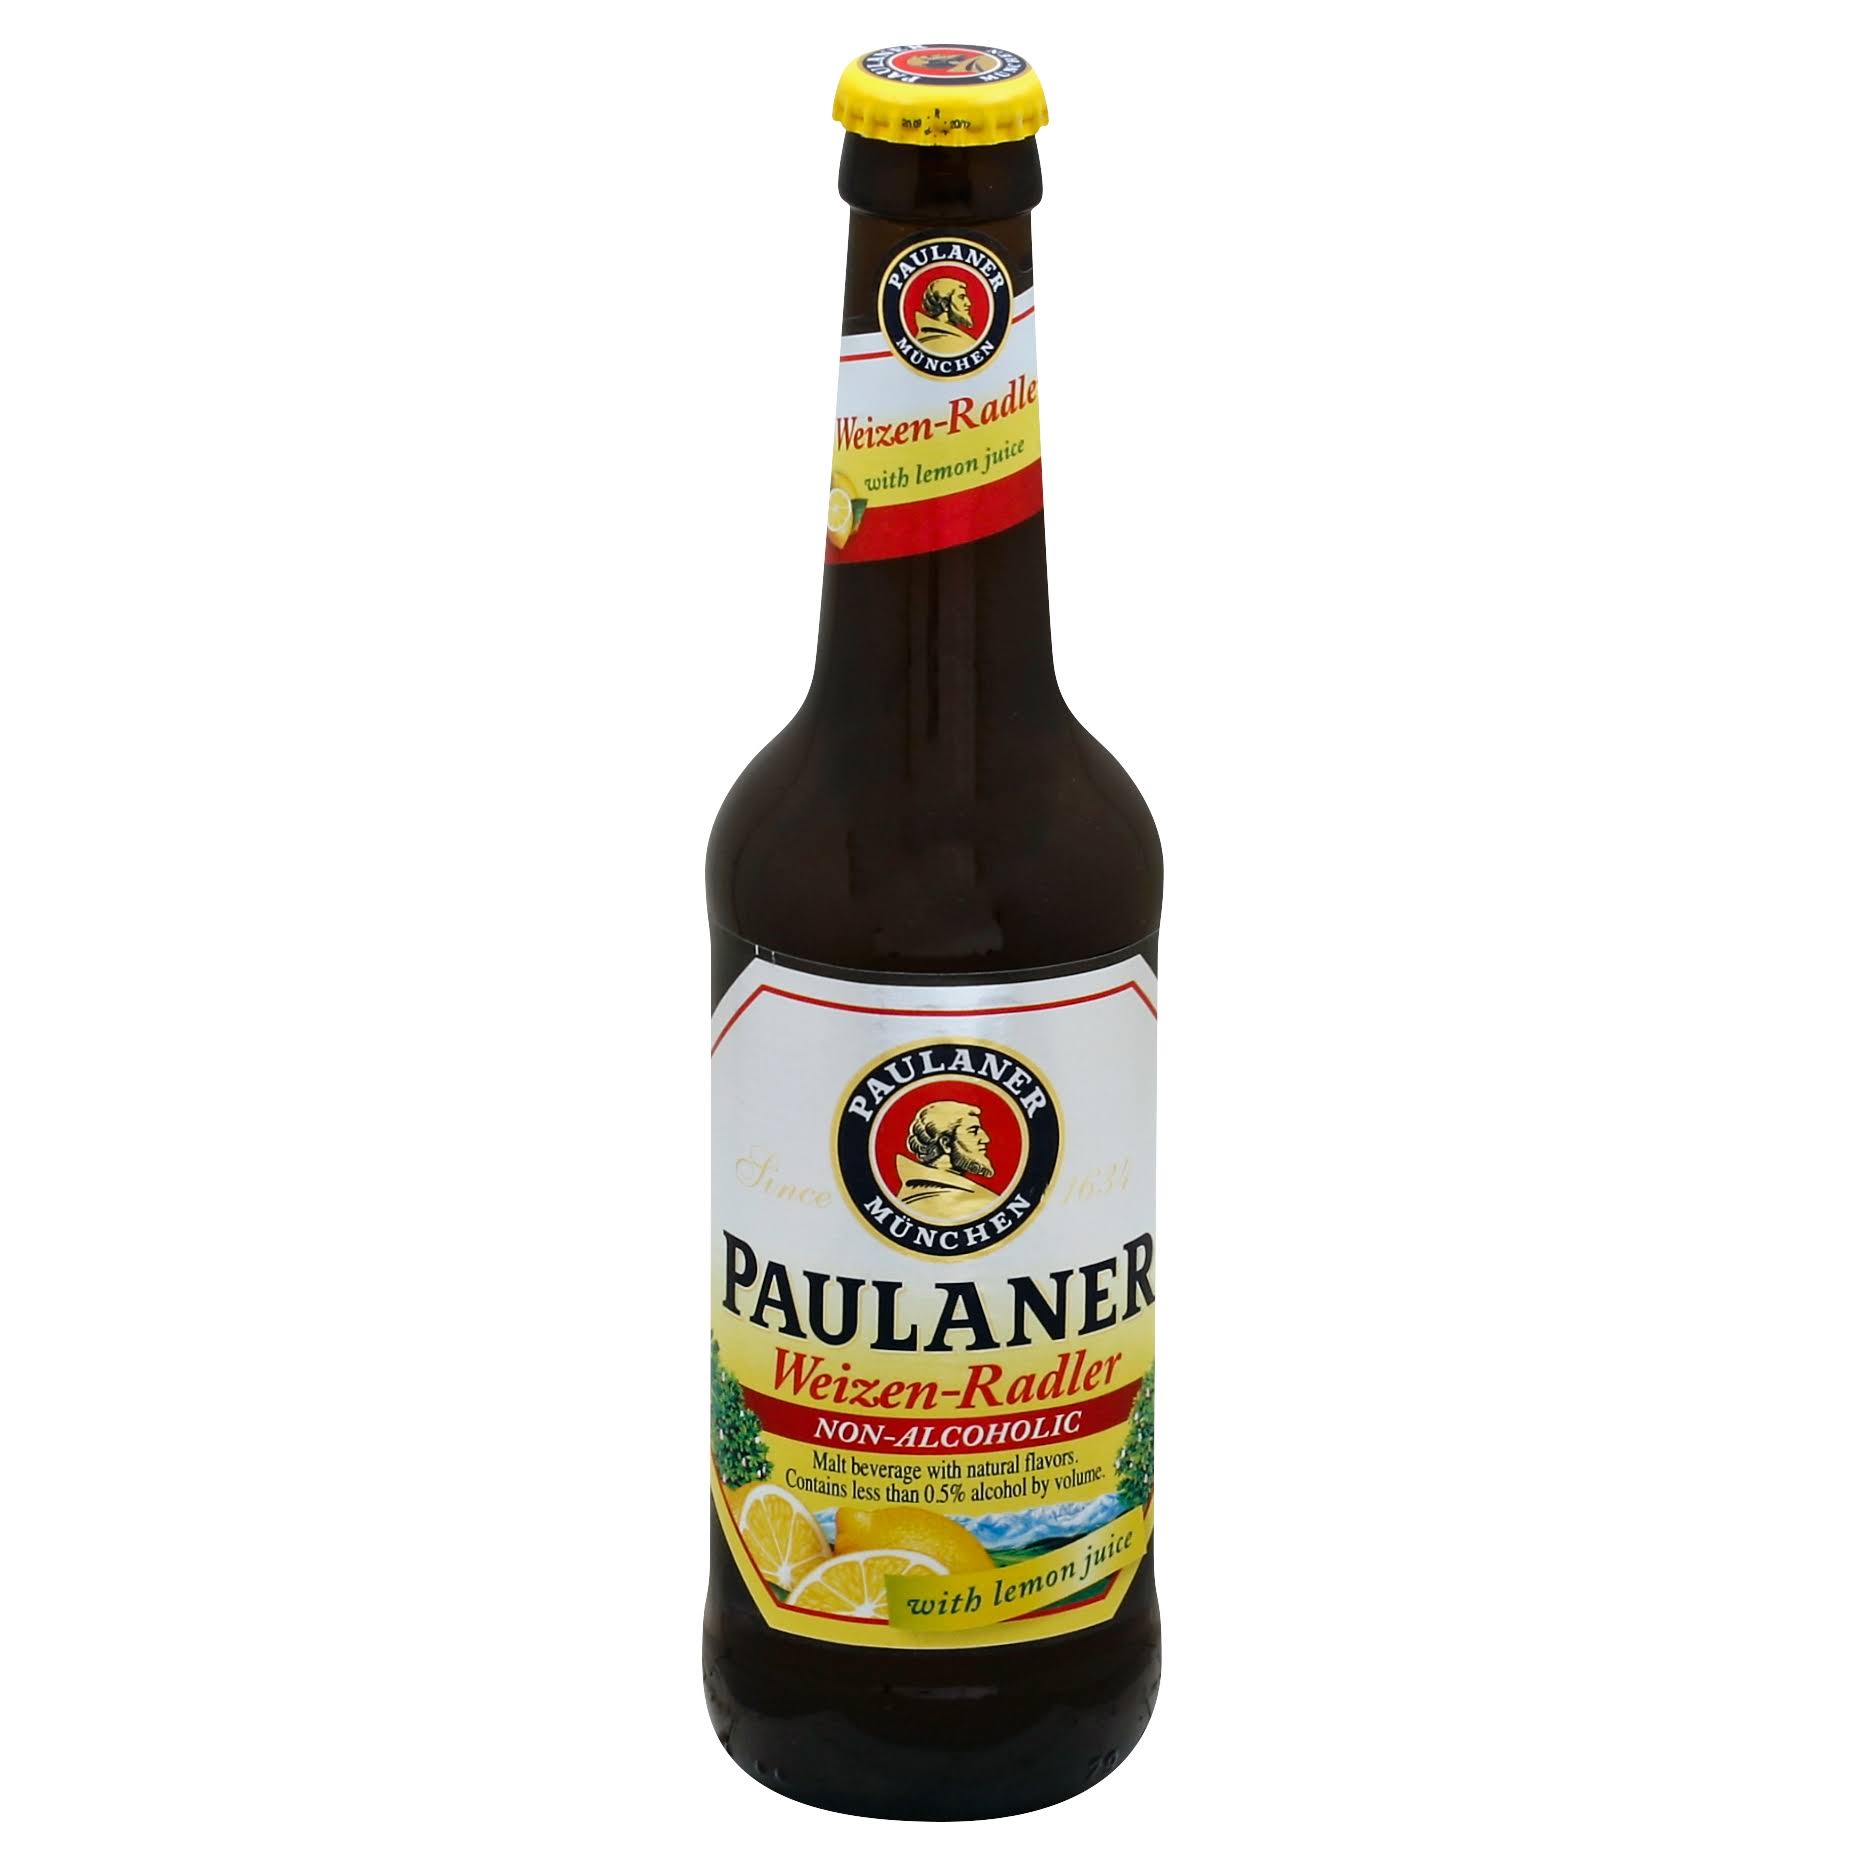 Paulaner Malt Beverage, Non-Alcoholic, Weizen-Radler, with Lemon Juice - 11.2 fl oz